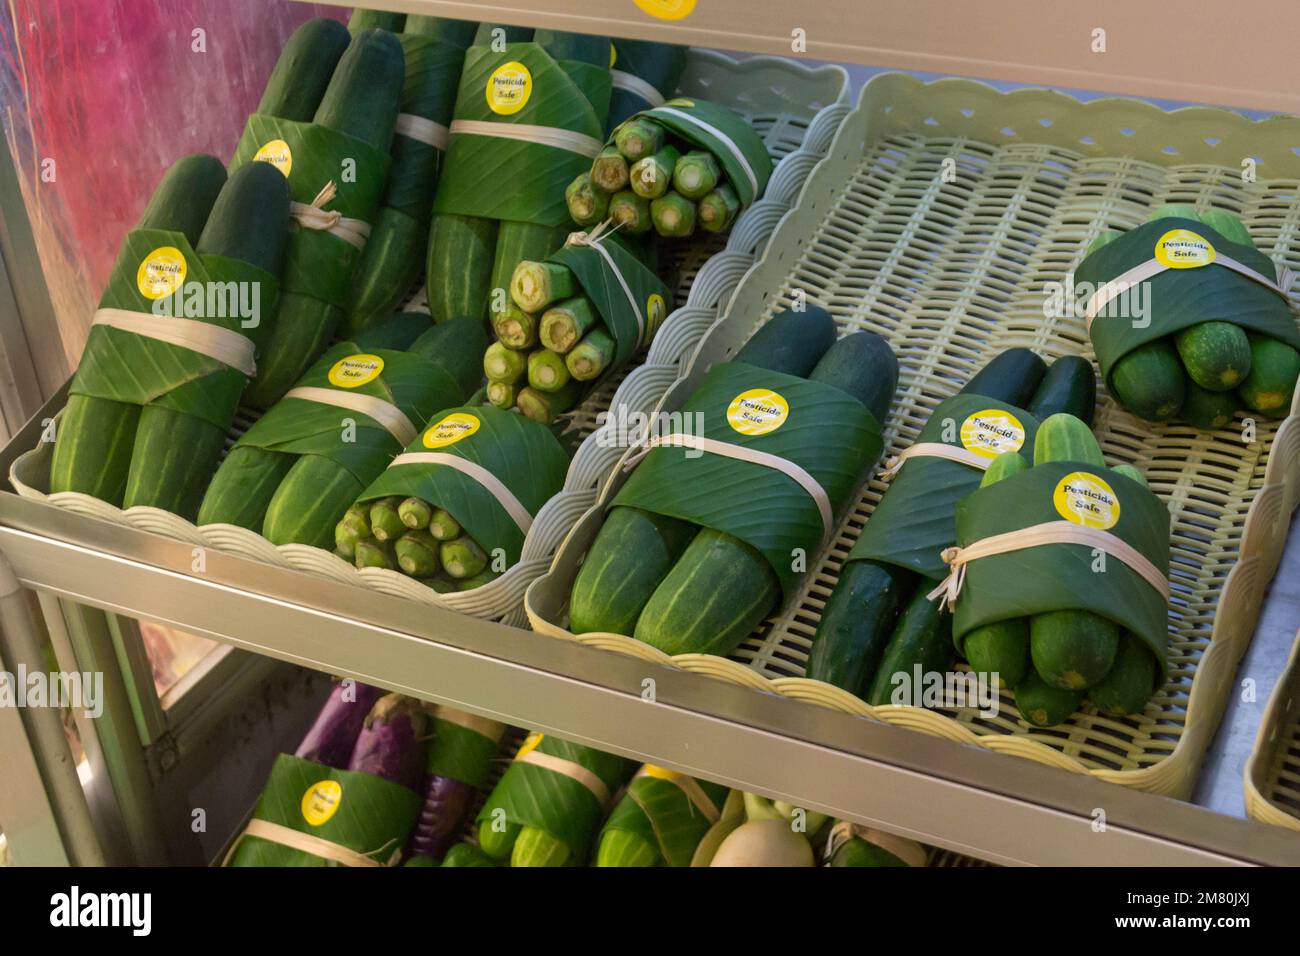 Plastic free, pesticide safe cucumbers, okra and eggplants. Stock Photo